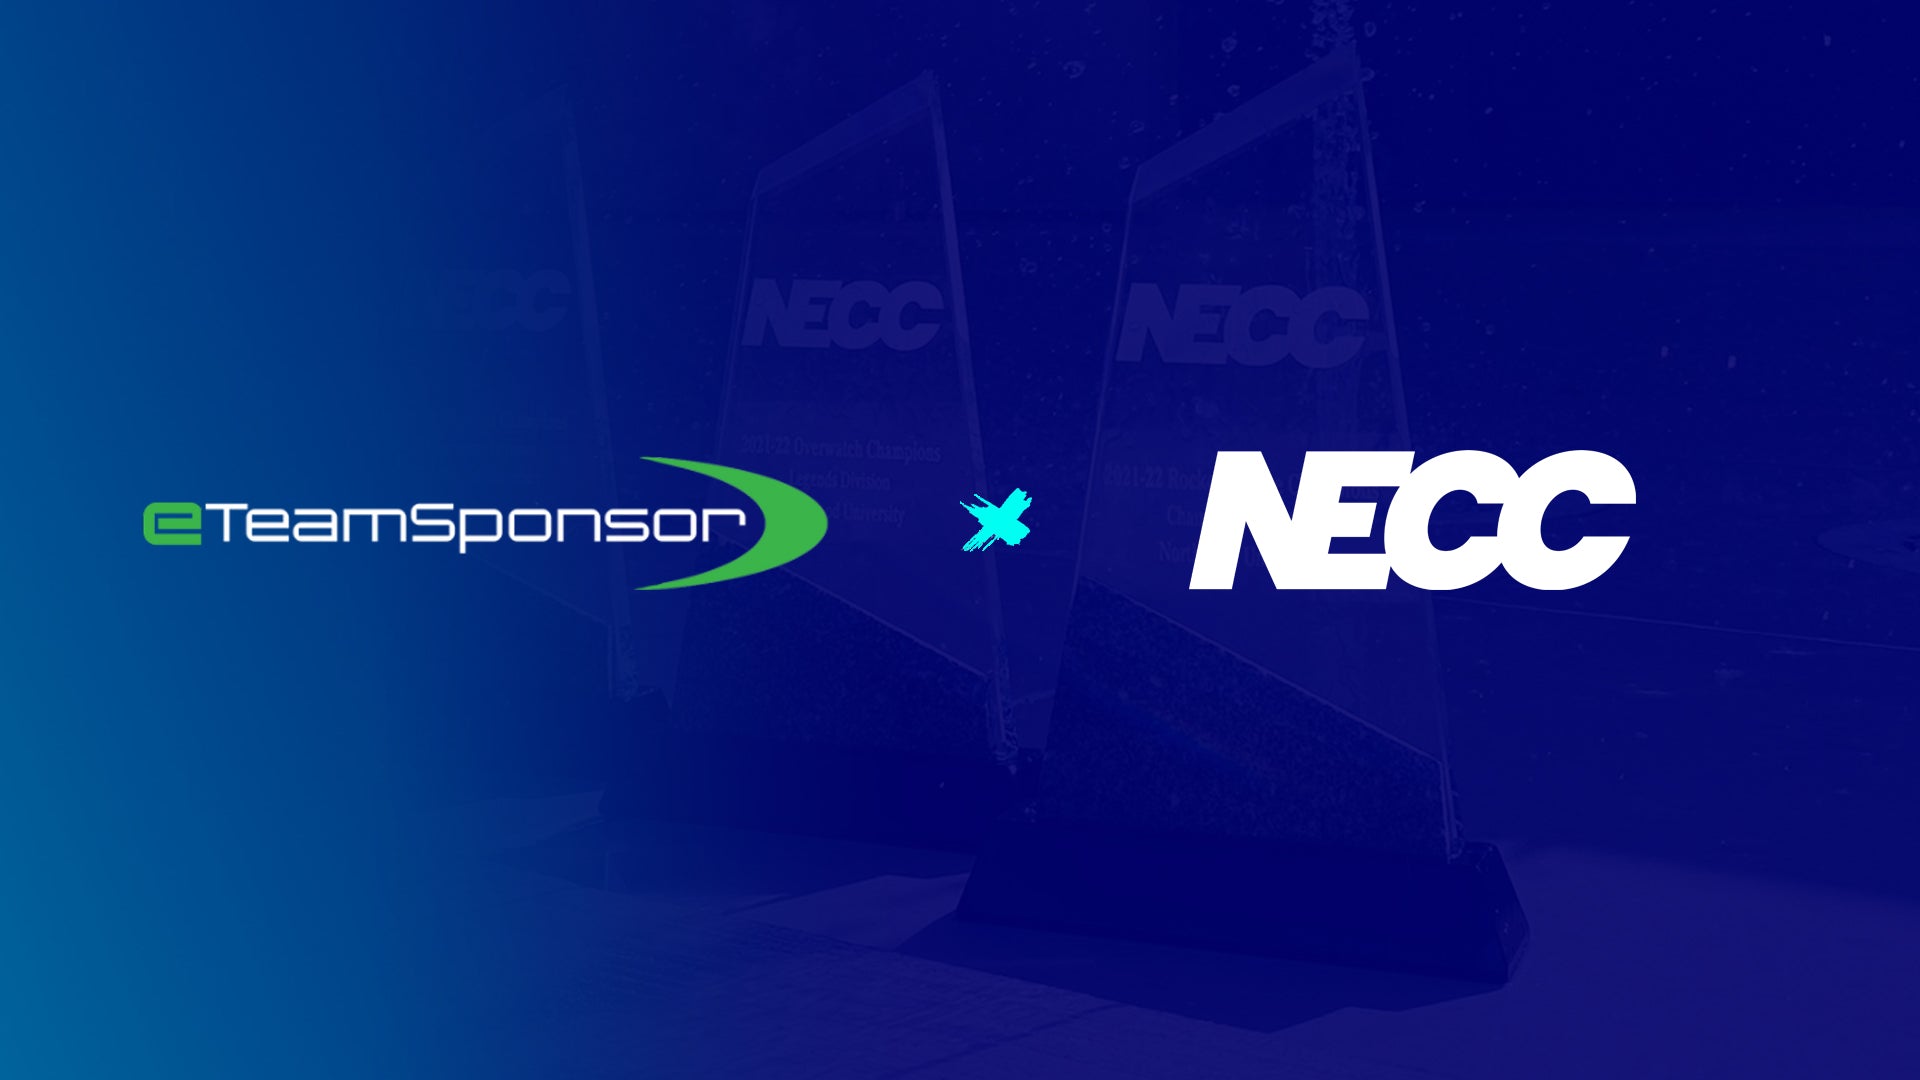 NECC Announces Partnership with eTeamSponsor to Help Programs Raise Money